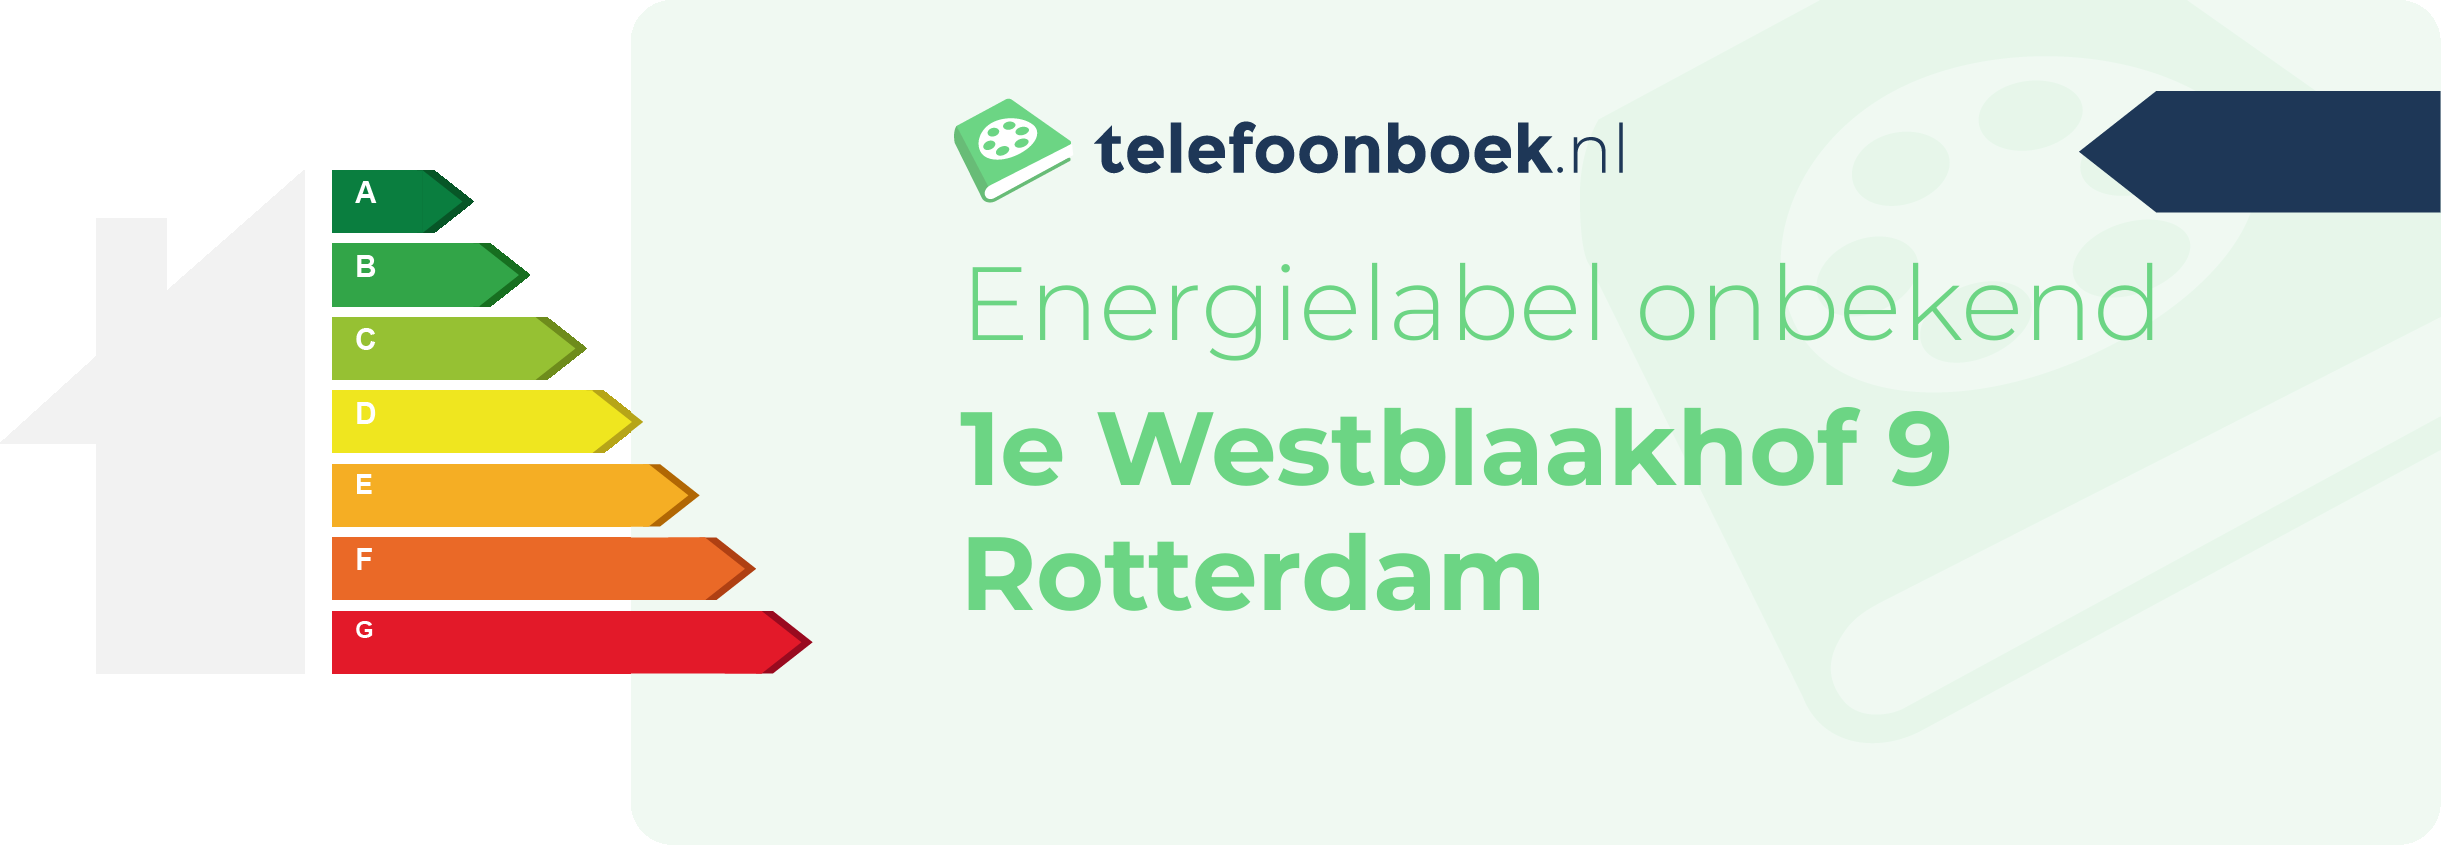 Energielabel 1e Westblaakhof 9 Rotterdam